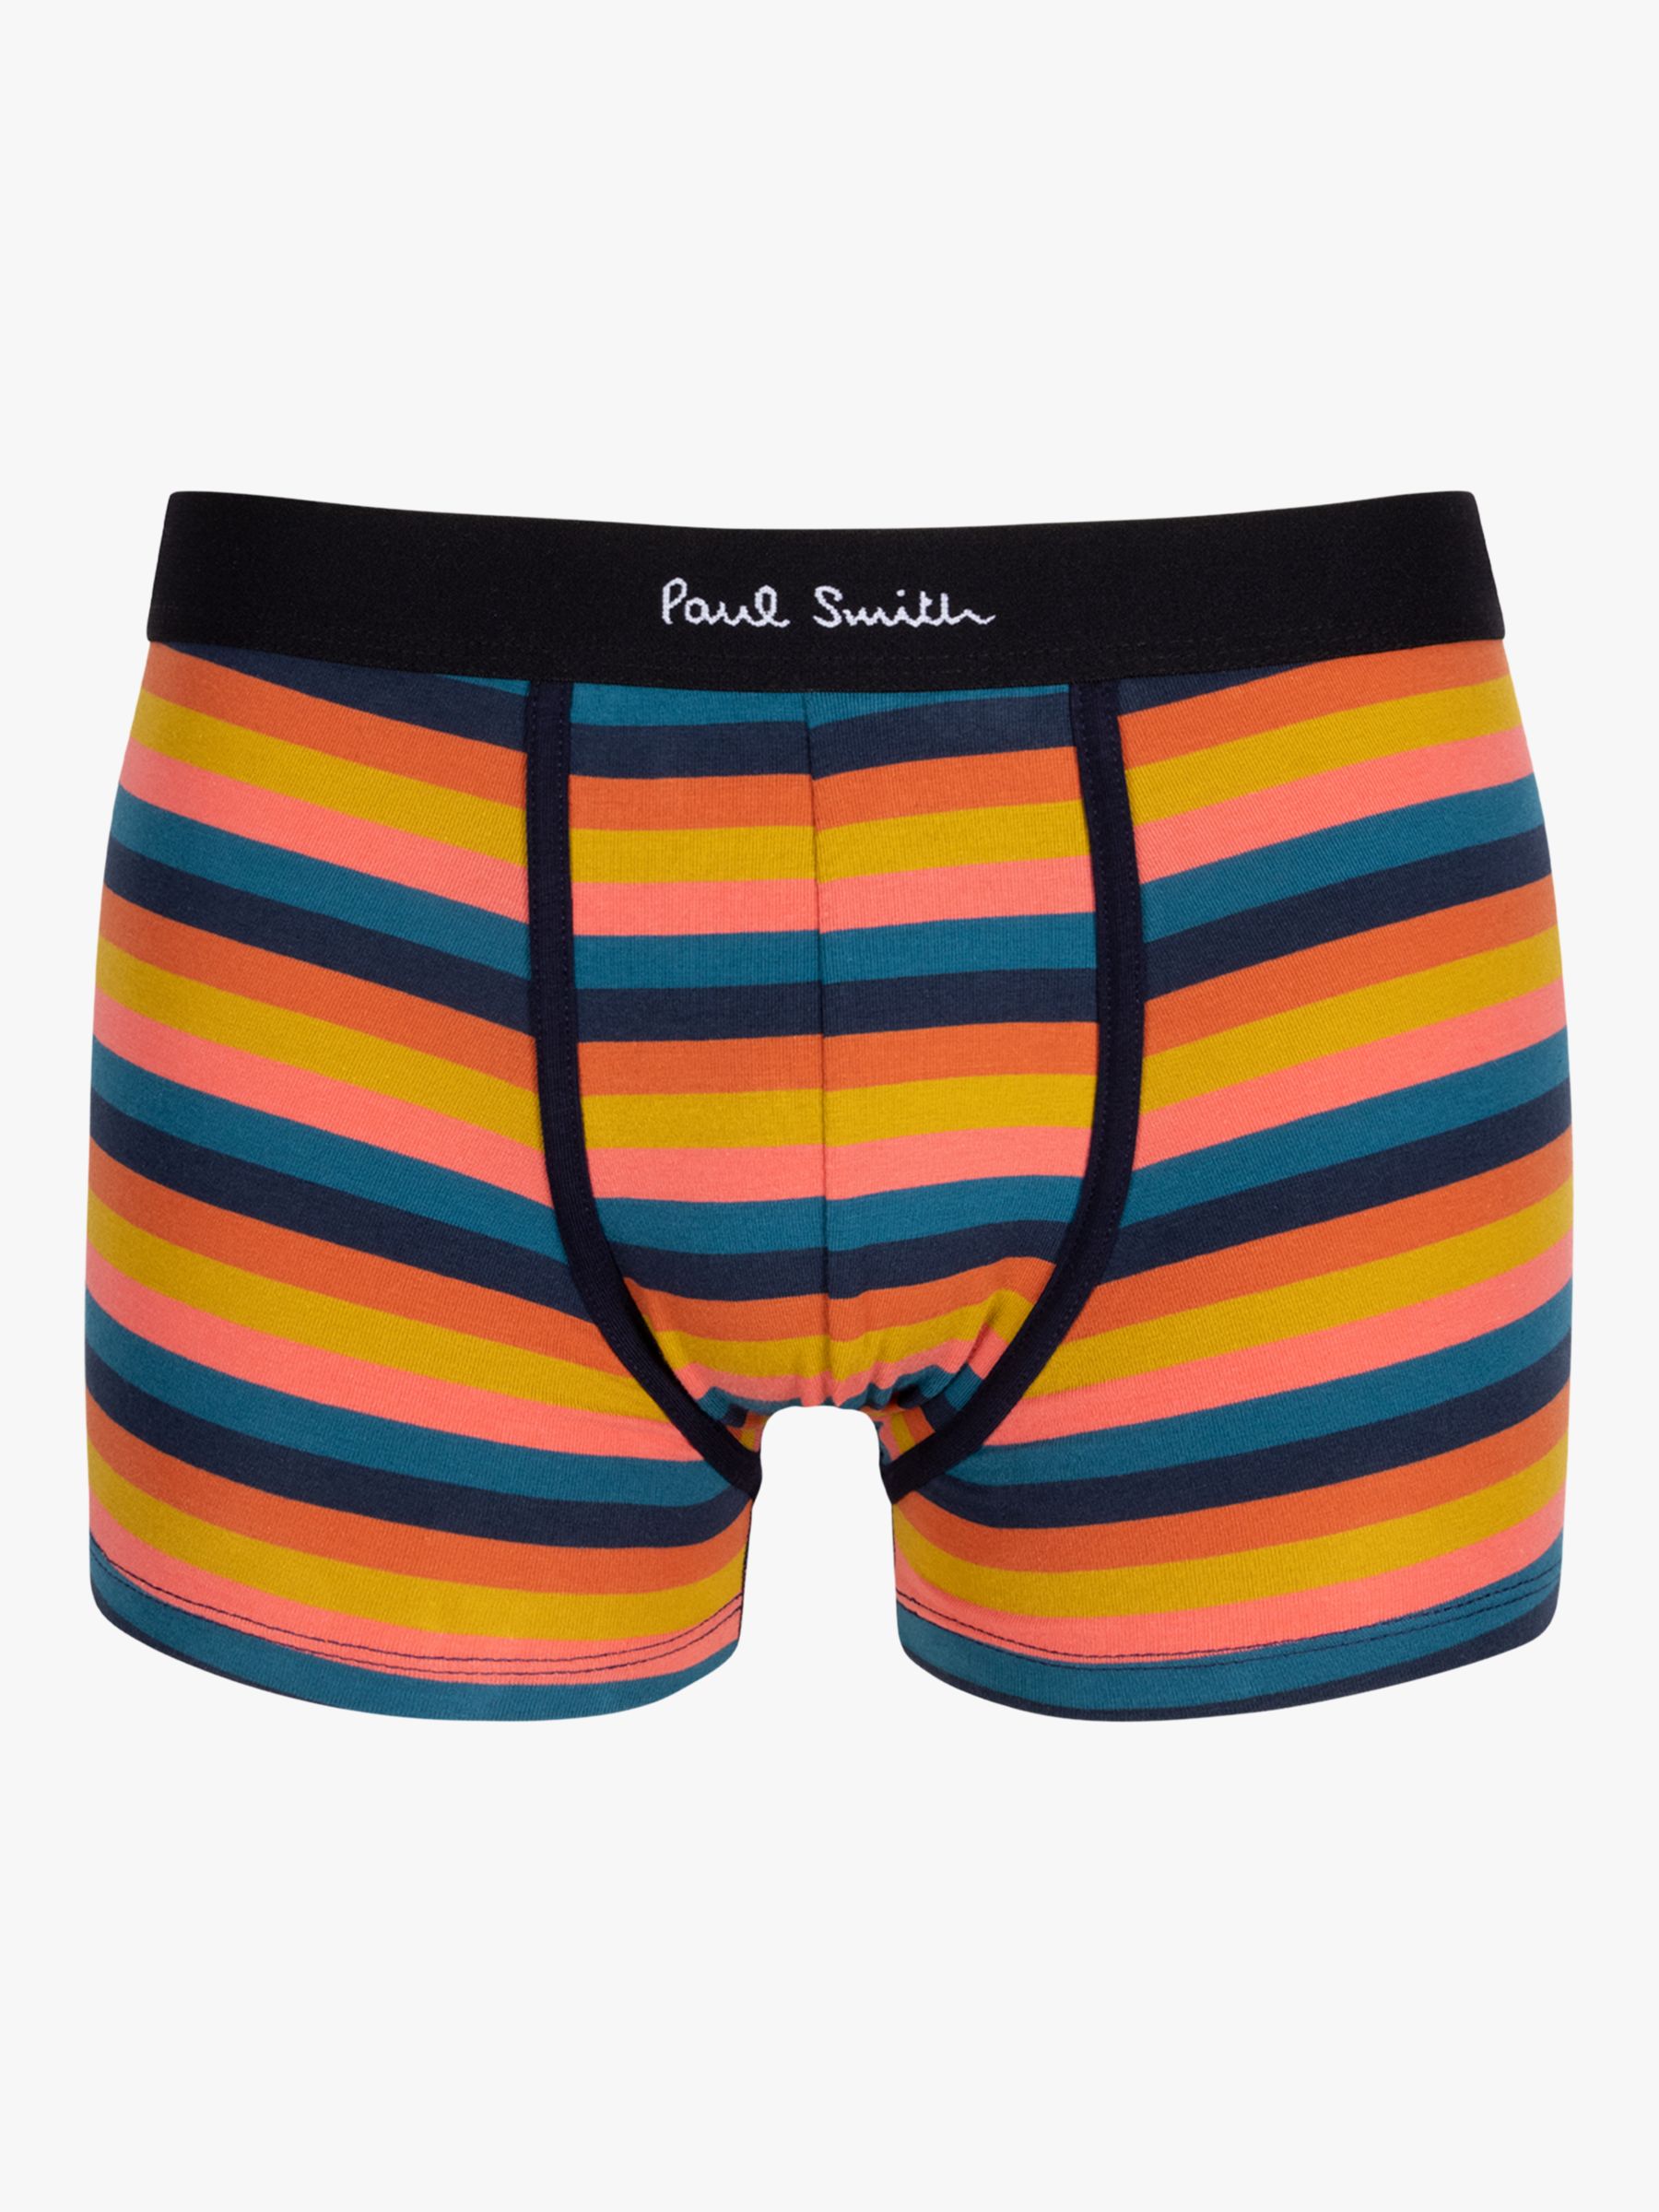 Paul Smith Organic Cotton Stripe, Spot & Plain Trunks, Pack of 3, Multi, XL